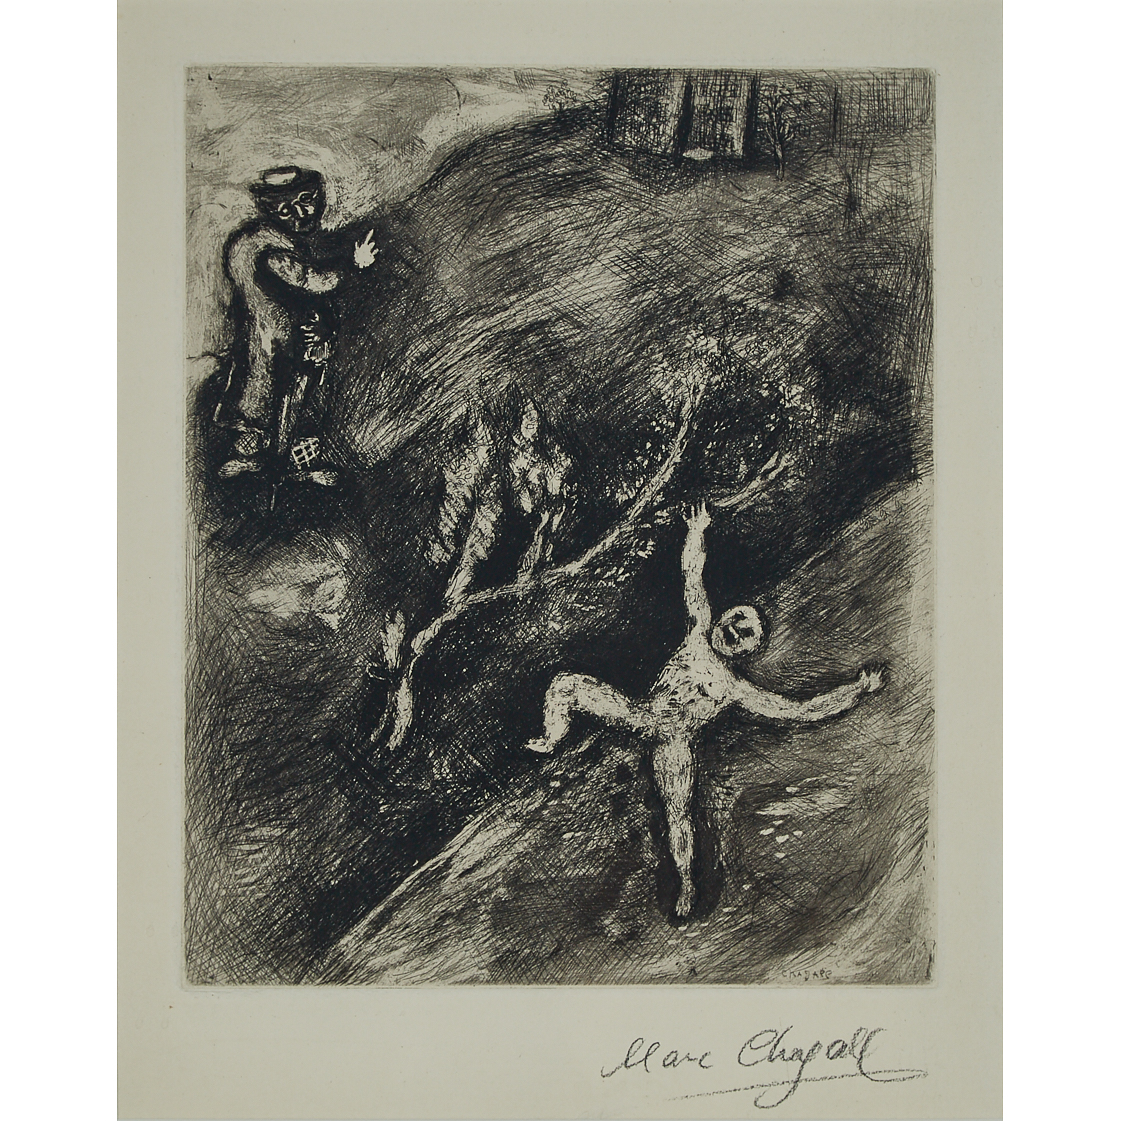 Marc Chagall (1998-1985